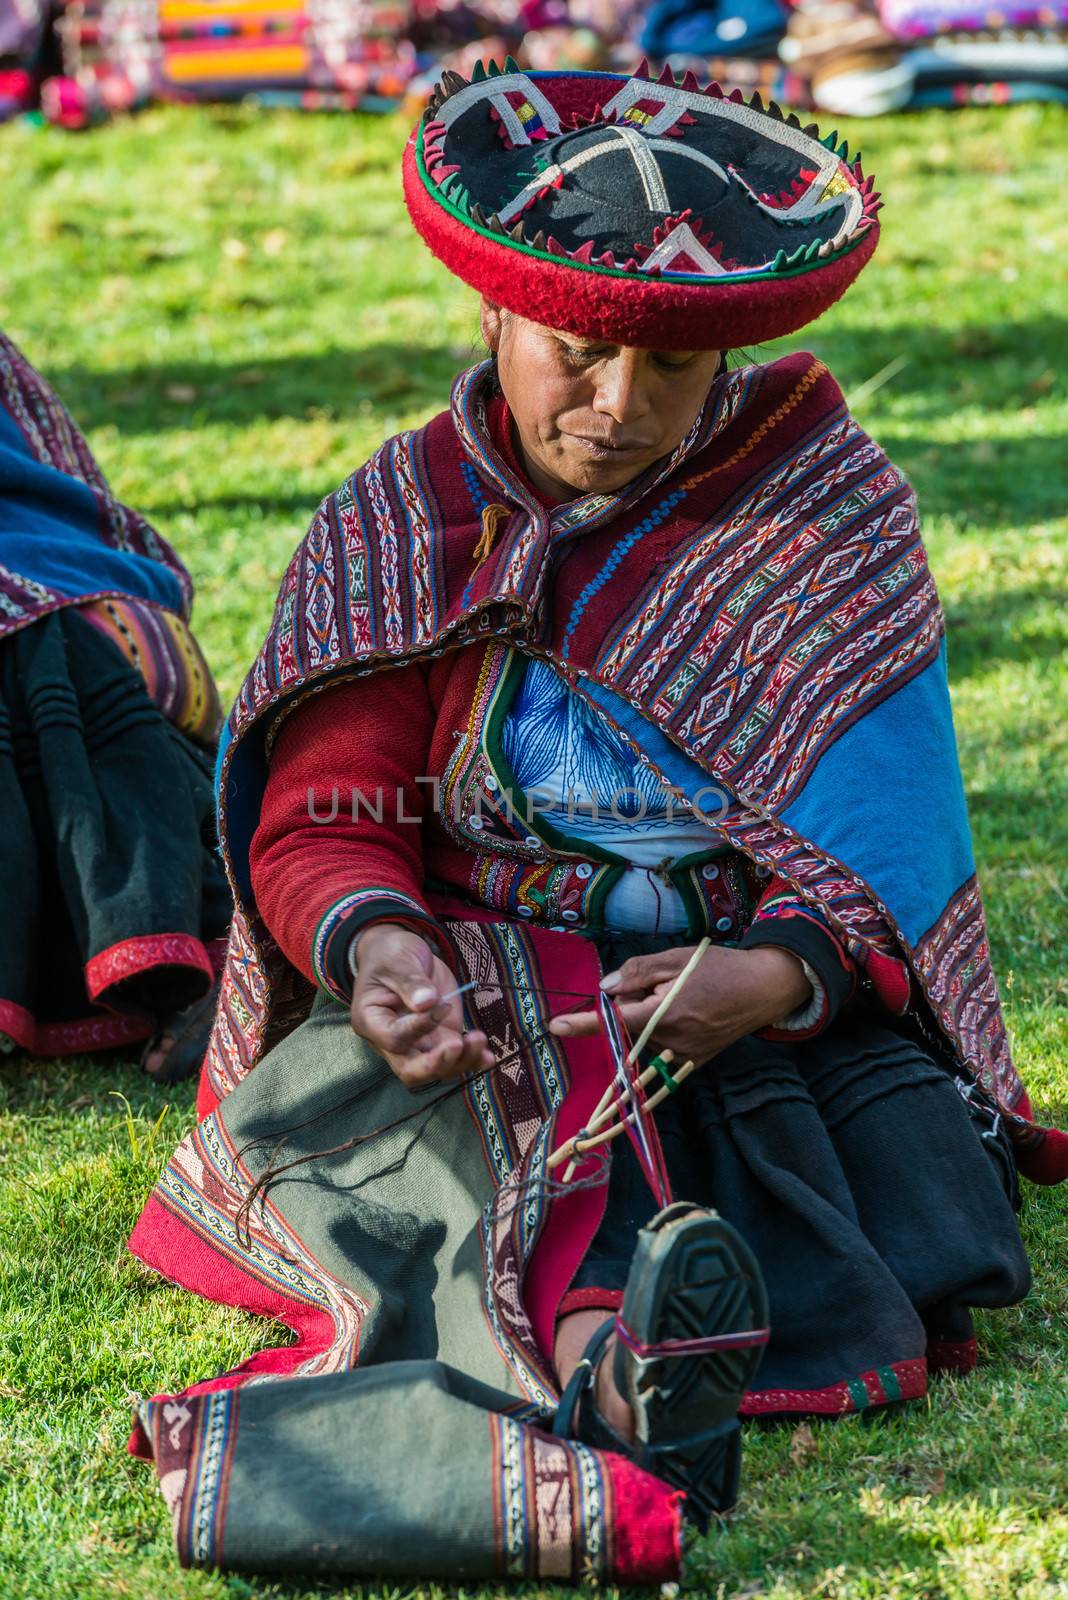 Cuzco, Peru - July 15, 2013: women weaving in the peruvian Andes at Cuzco Peru on july 15th, 2013